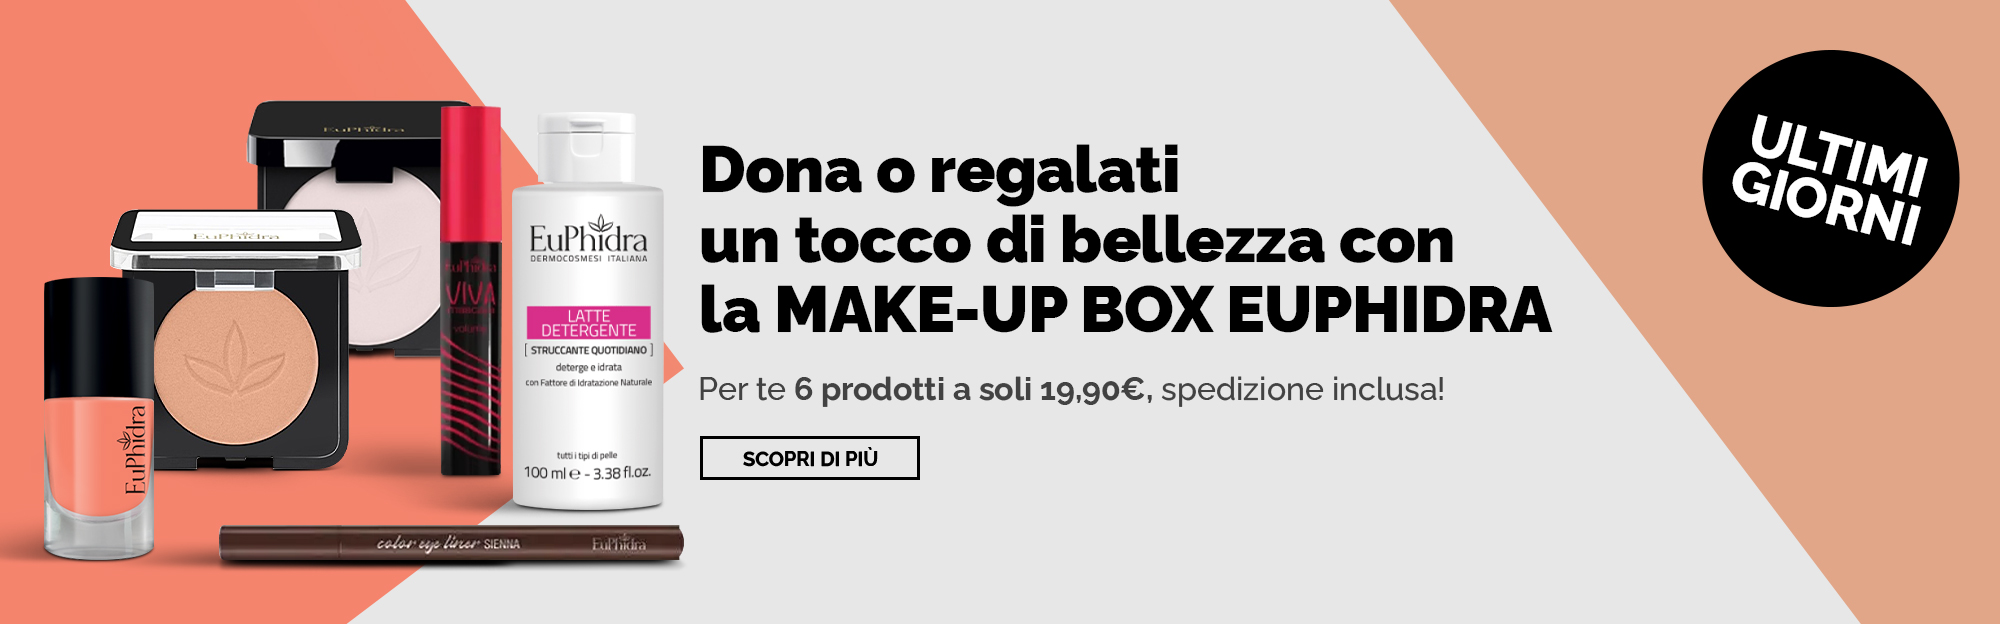 0000000000000000FarmaciaProcaccini_slideD_make-up-box-euphidra-2